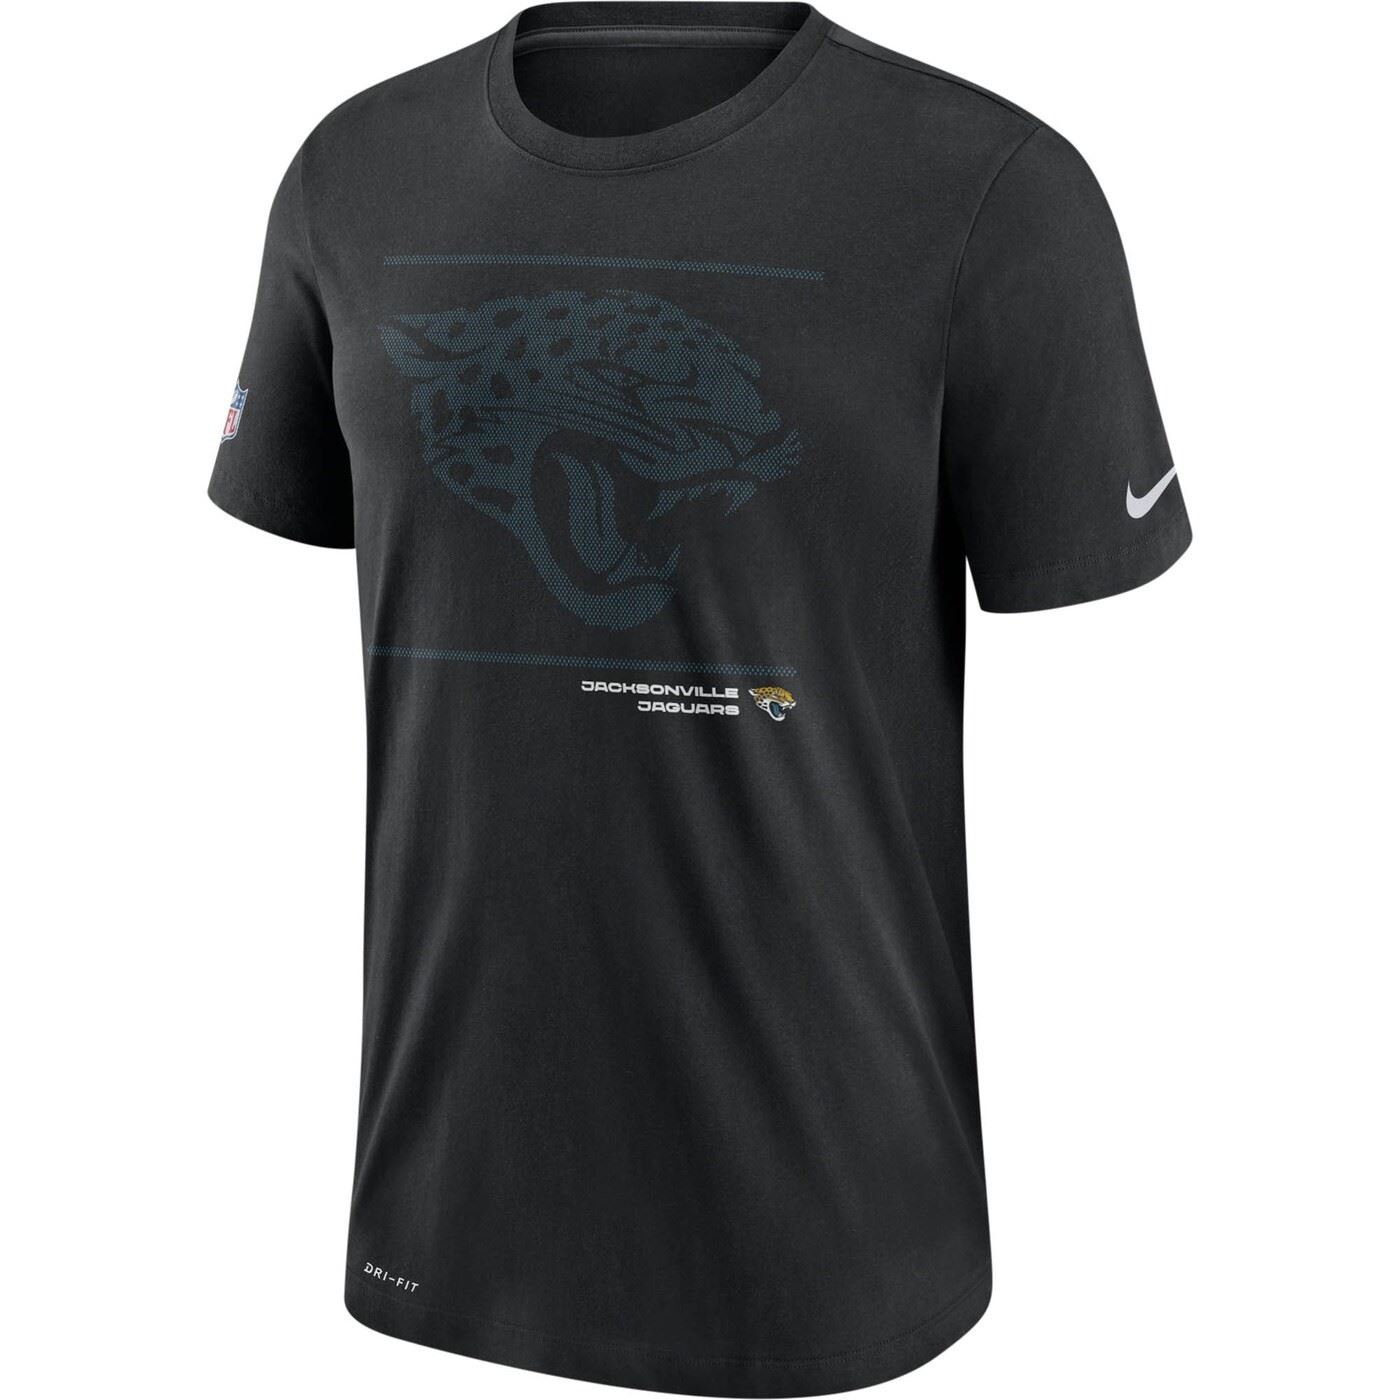 Jacksonville Jaguars NFL DFCT Team Issue Tee Black T-Shirt Nike